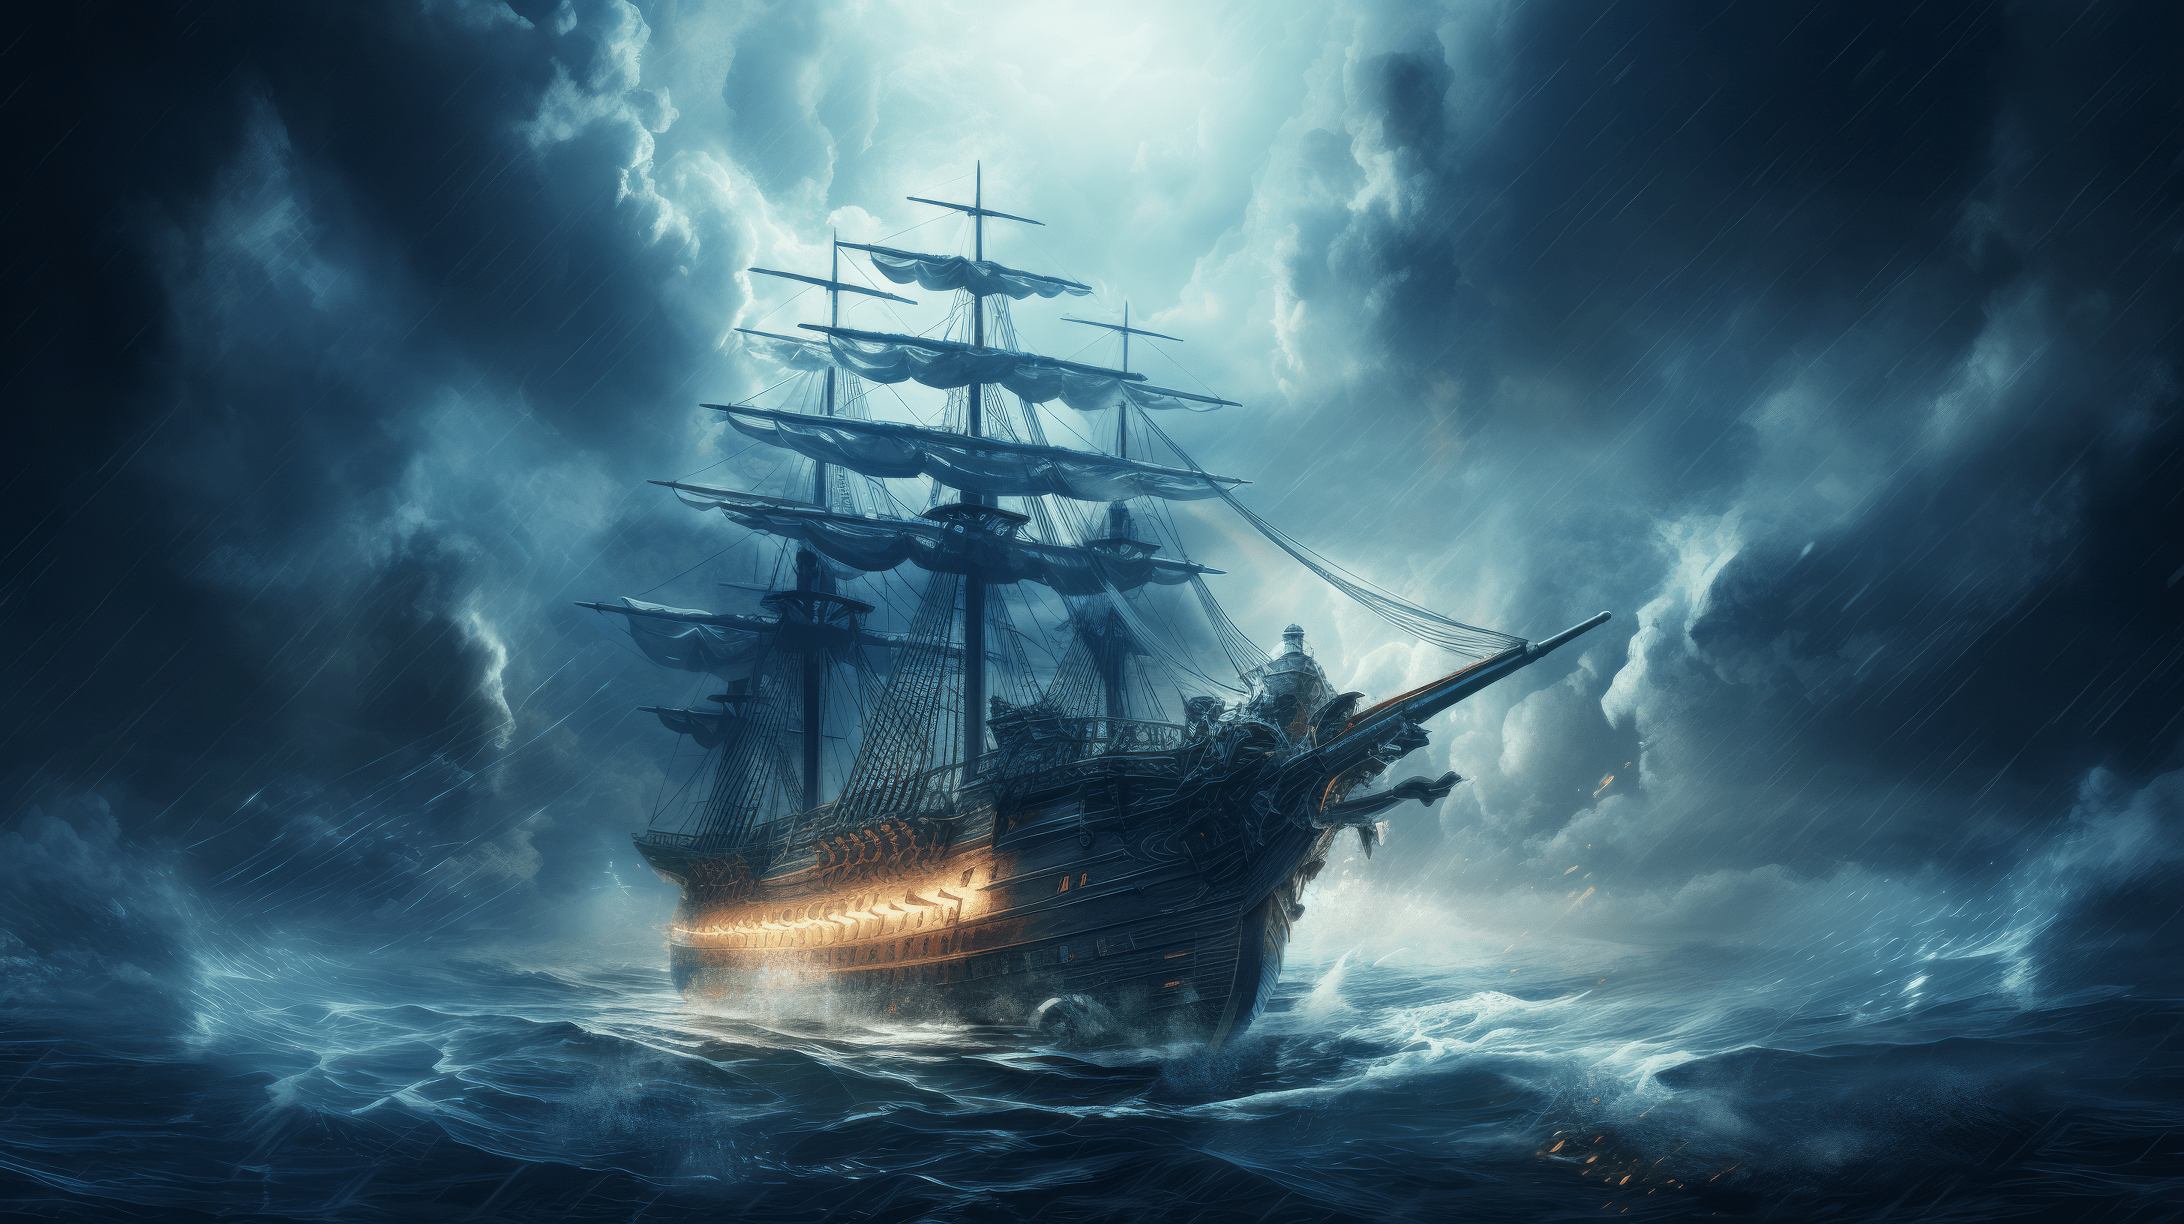 A ship sails through a stormy sea - Pirate